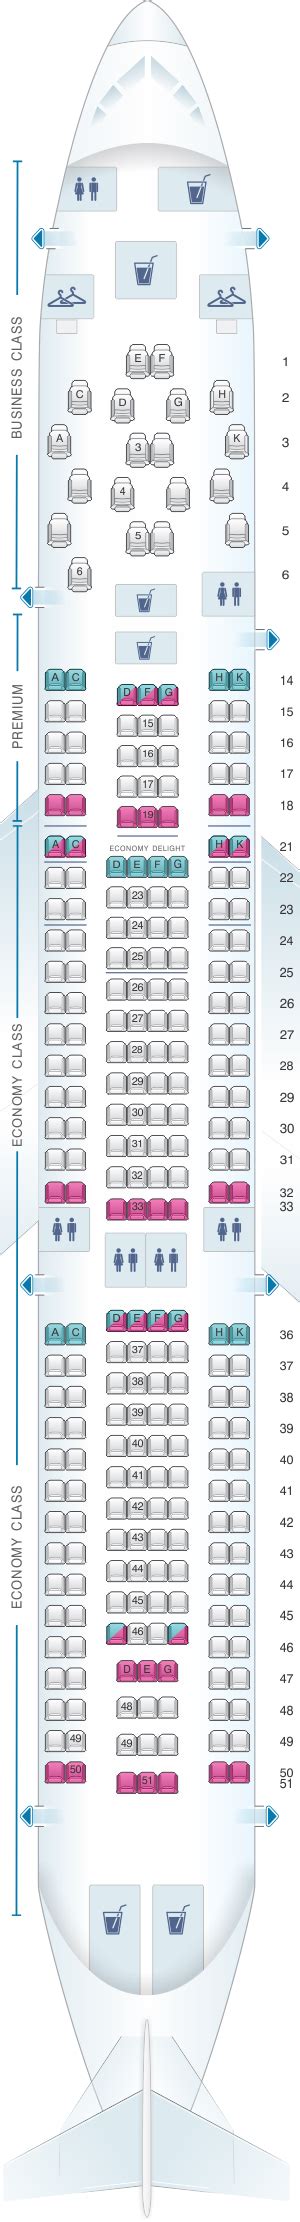 Virgin Airbus A320 Seating